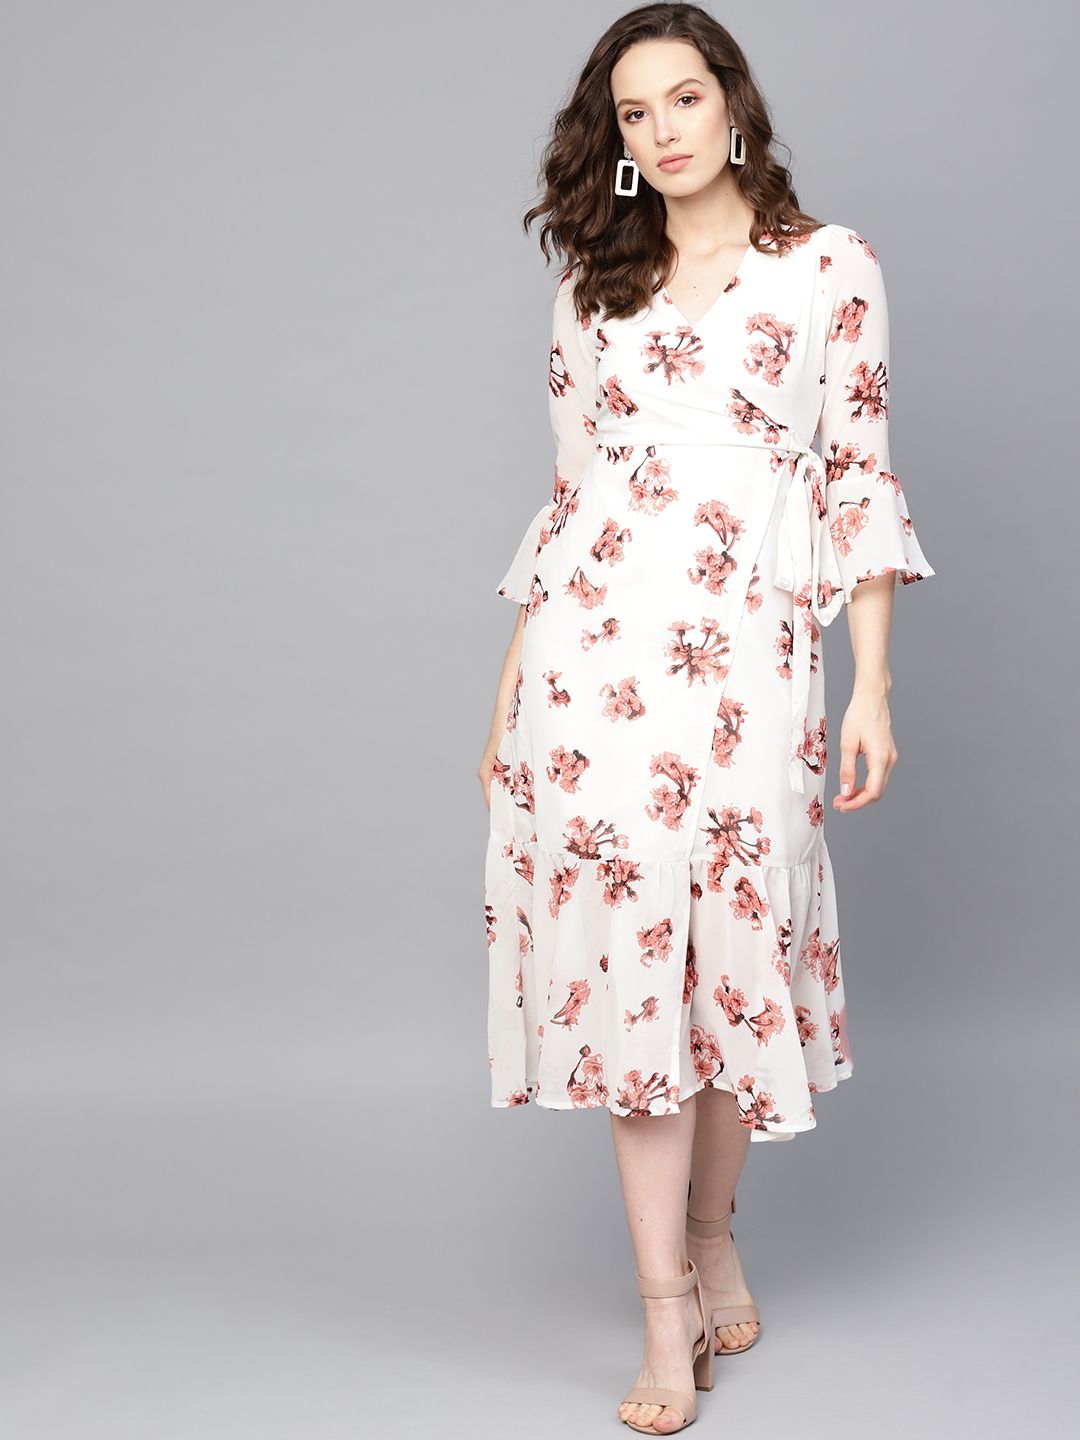 SASSAFRAS White & Pink Floral Print Wrap Dress Price in India